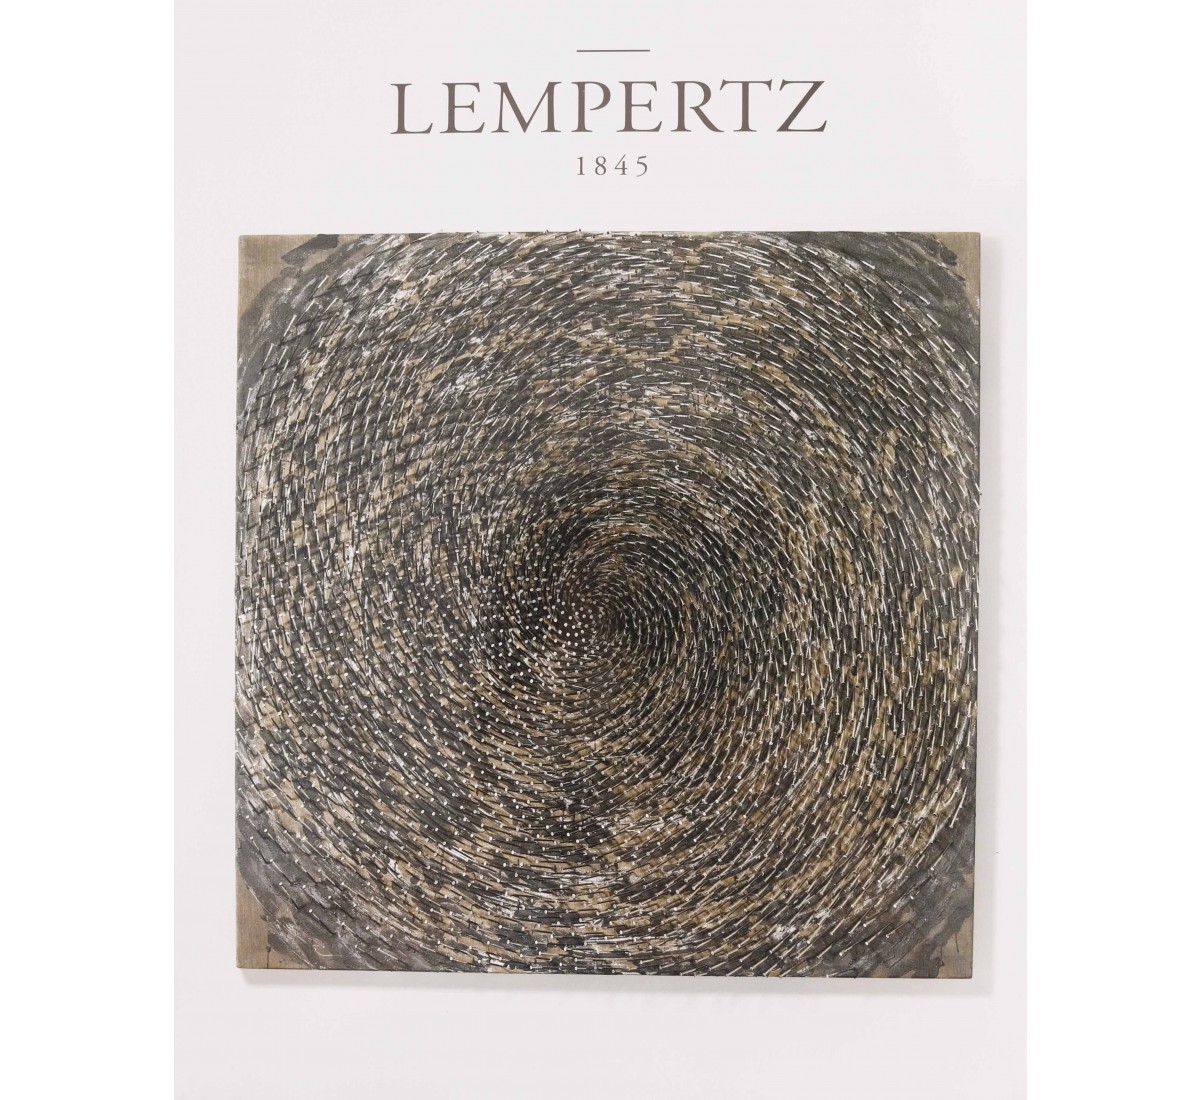 LEMPERTZ, CONTEMPORARY ART (2)